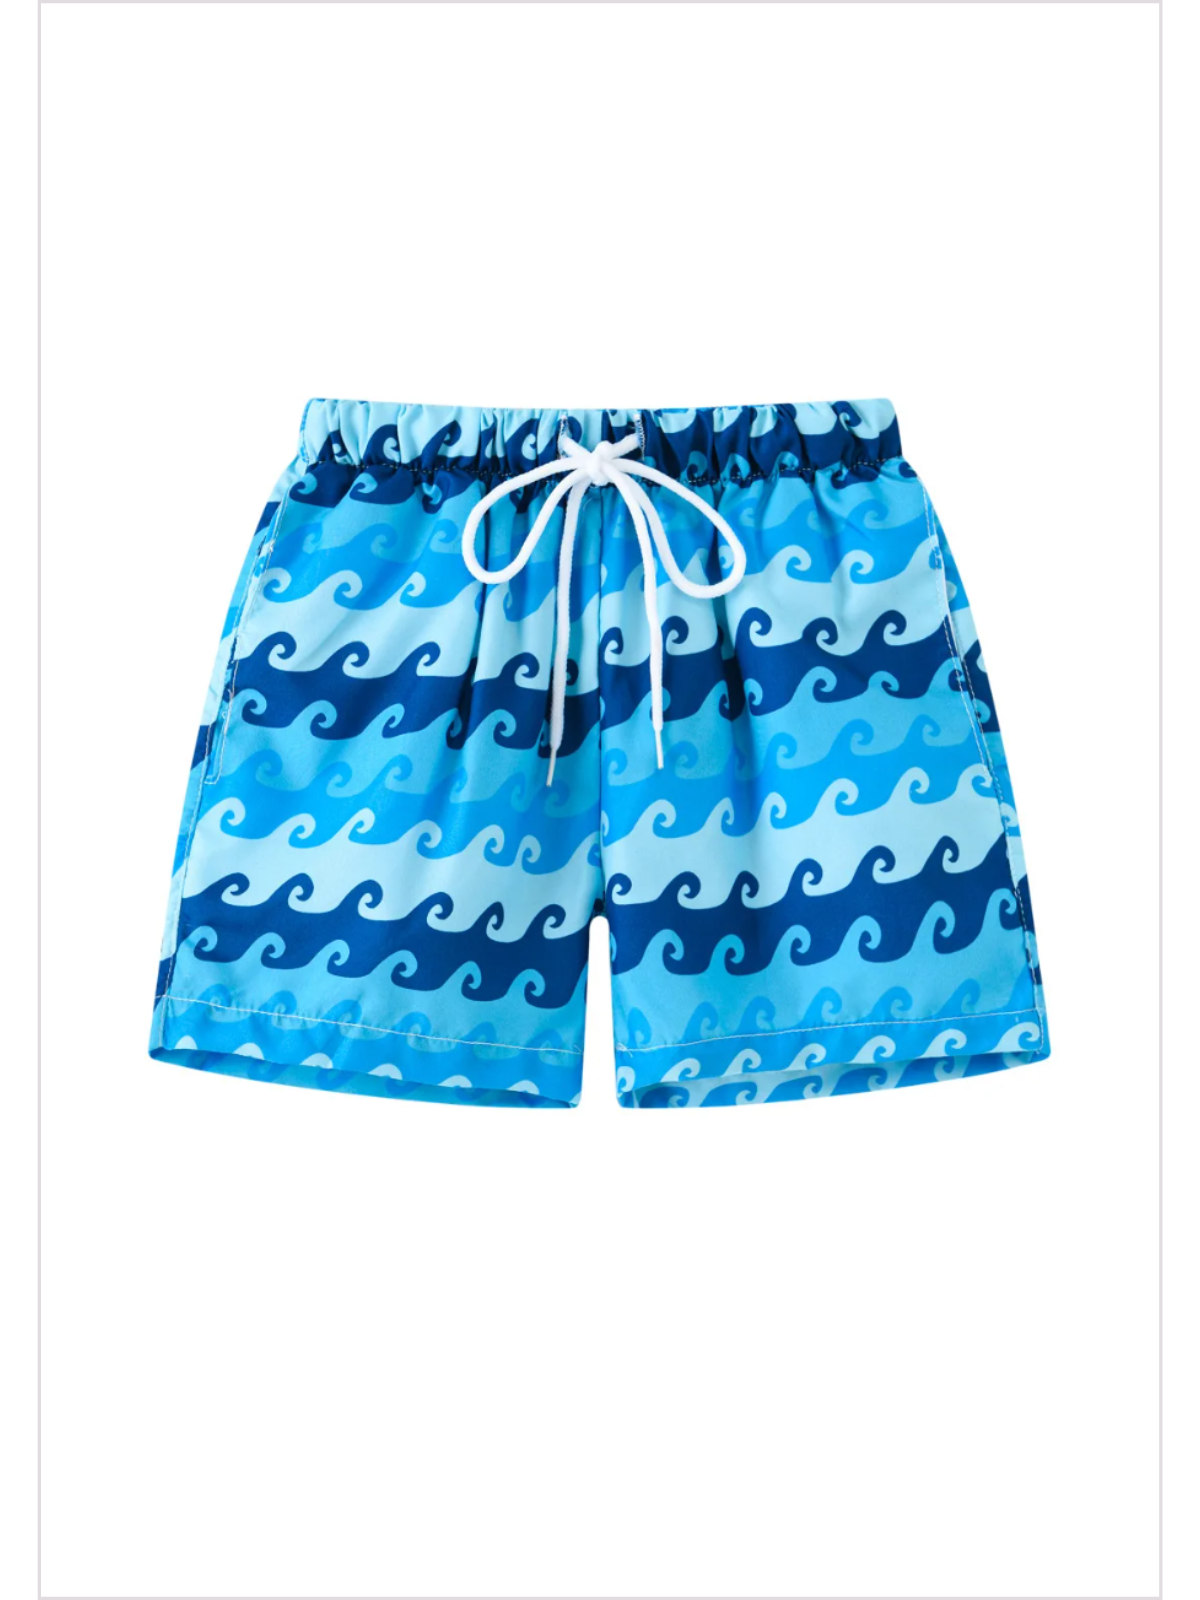 Boys Multicolor Swim Trunks | Mia Belle Girls Summer Outfits